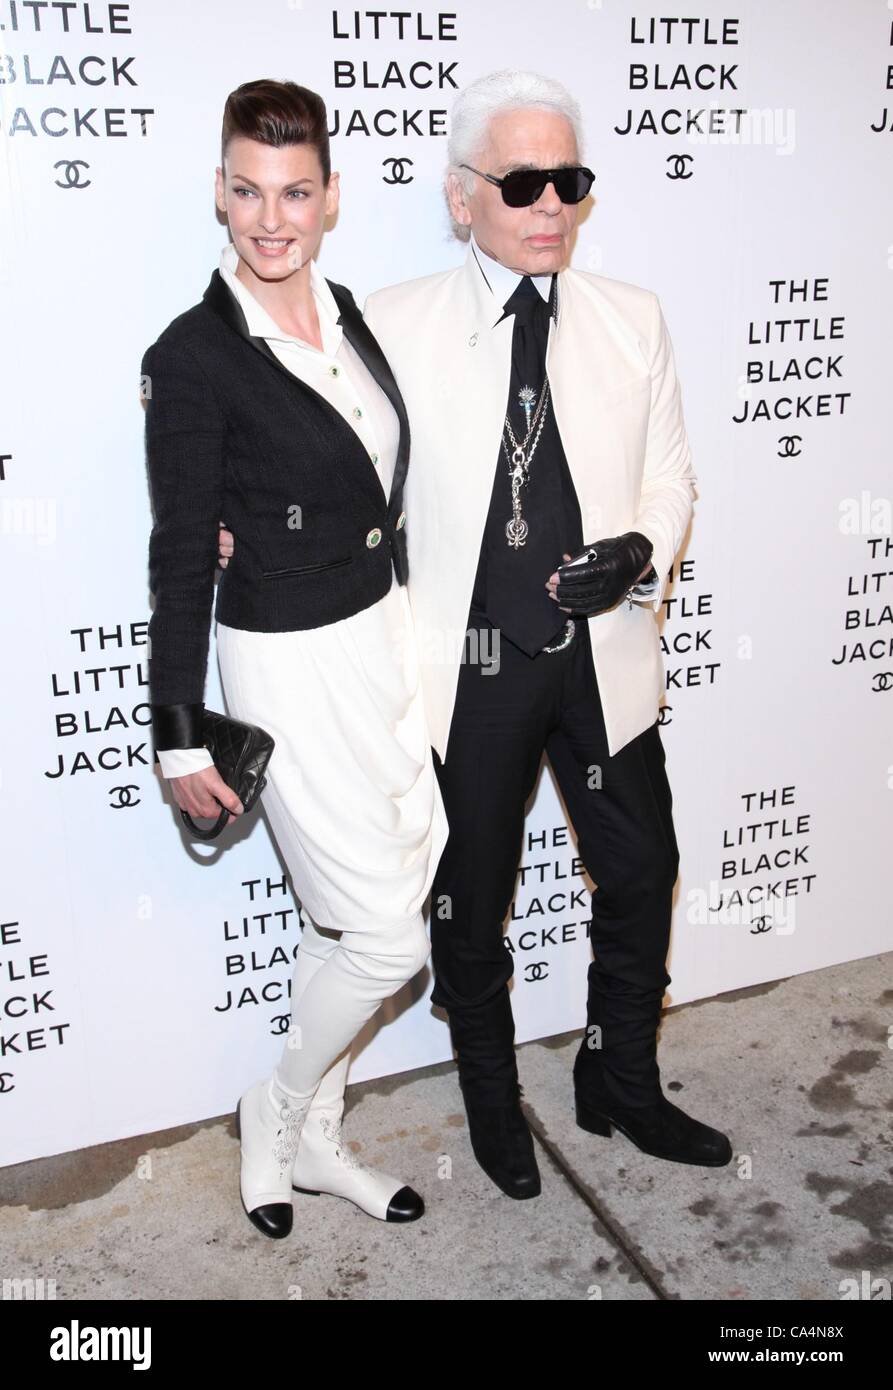 Linda Evangelista, Karl Lagerfeld at arrivals for The Little Black